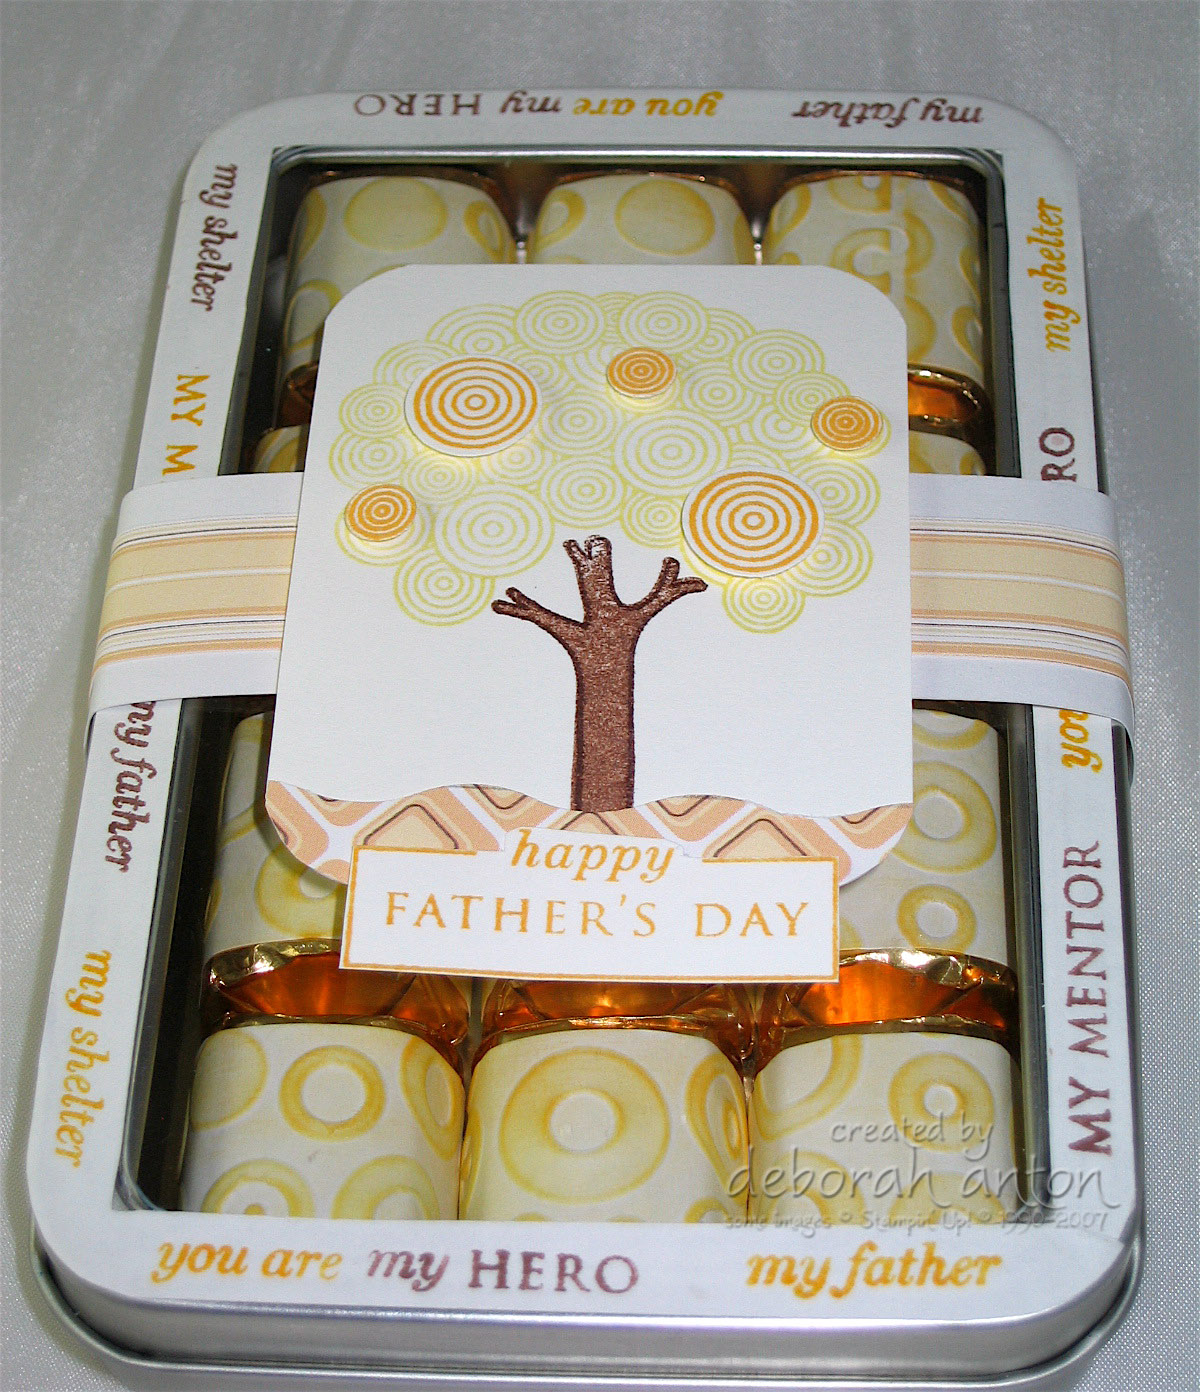 [Fathers+Day+Chocolates.jpg]